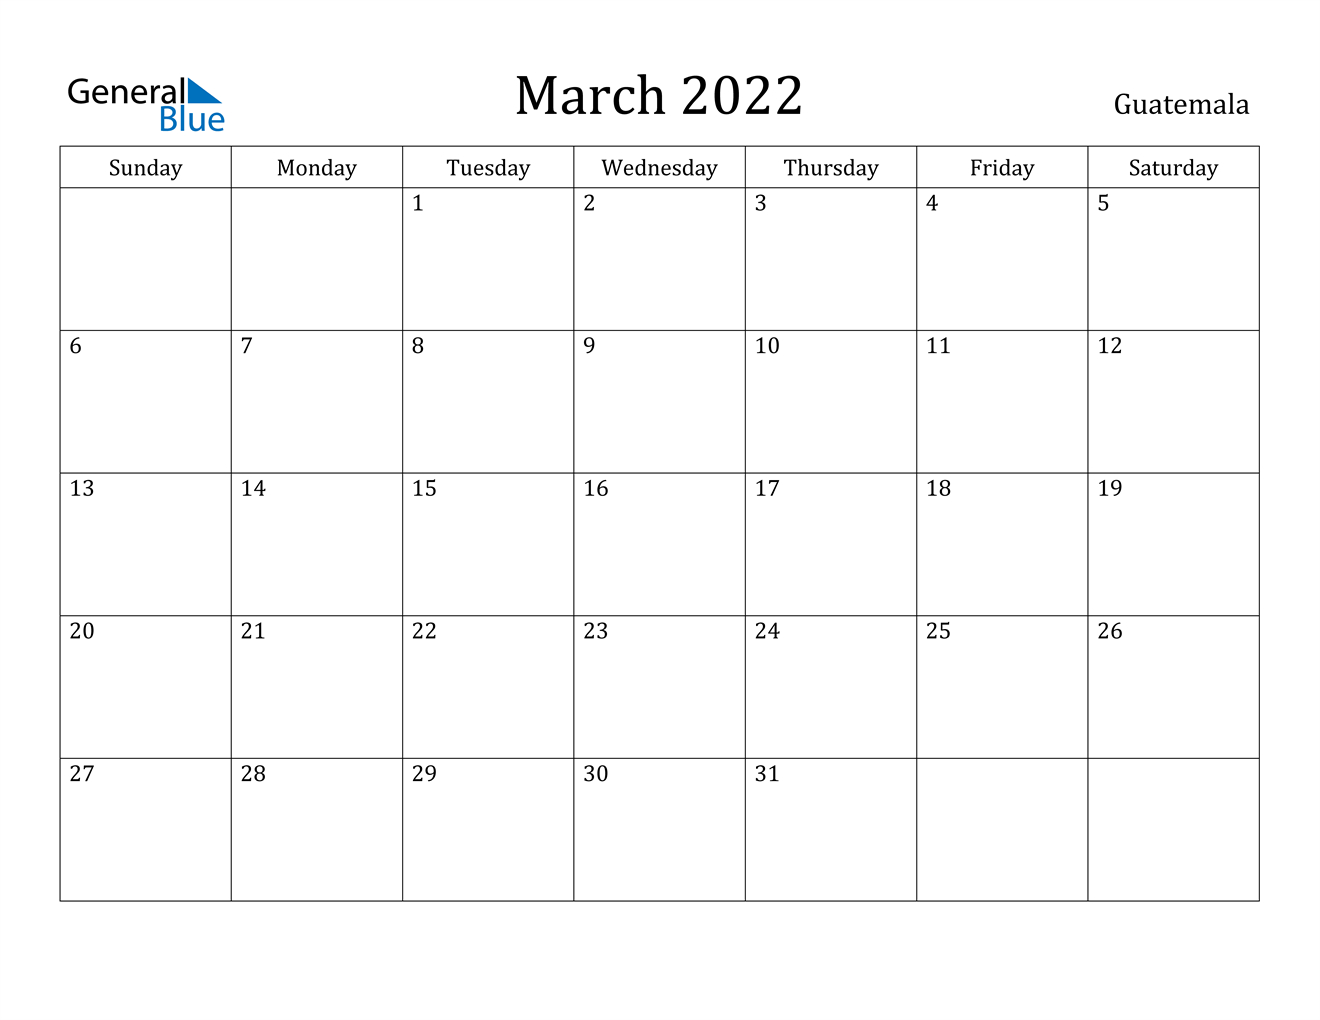 March 2022 Calendar - Guatemala